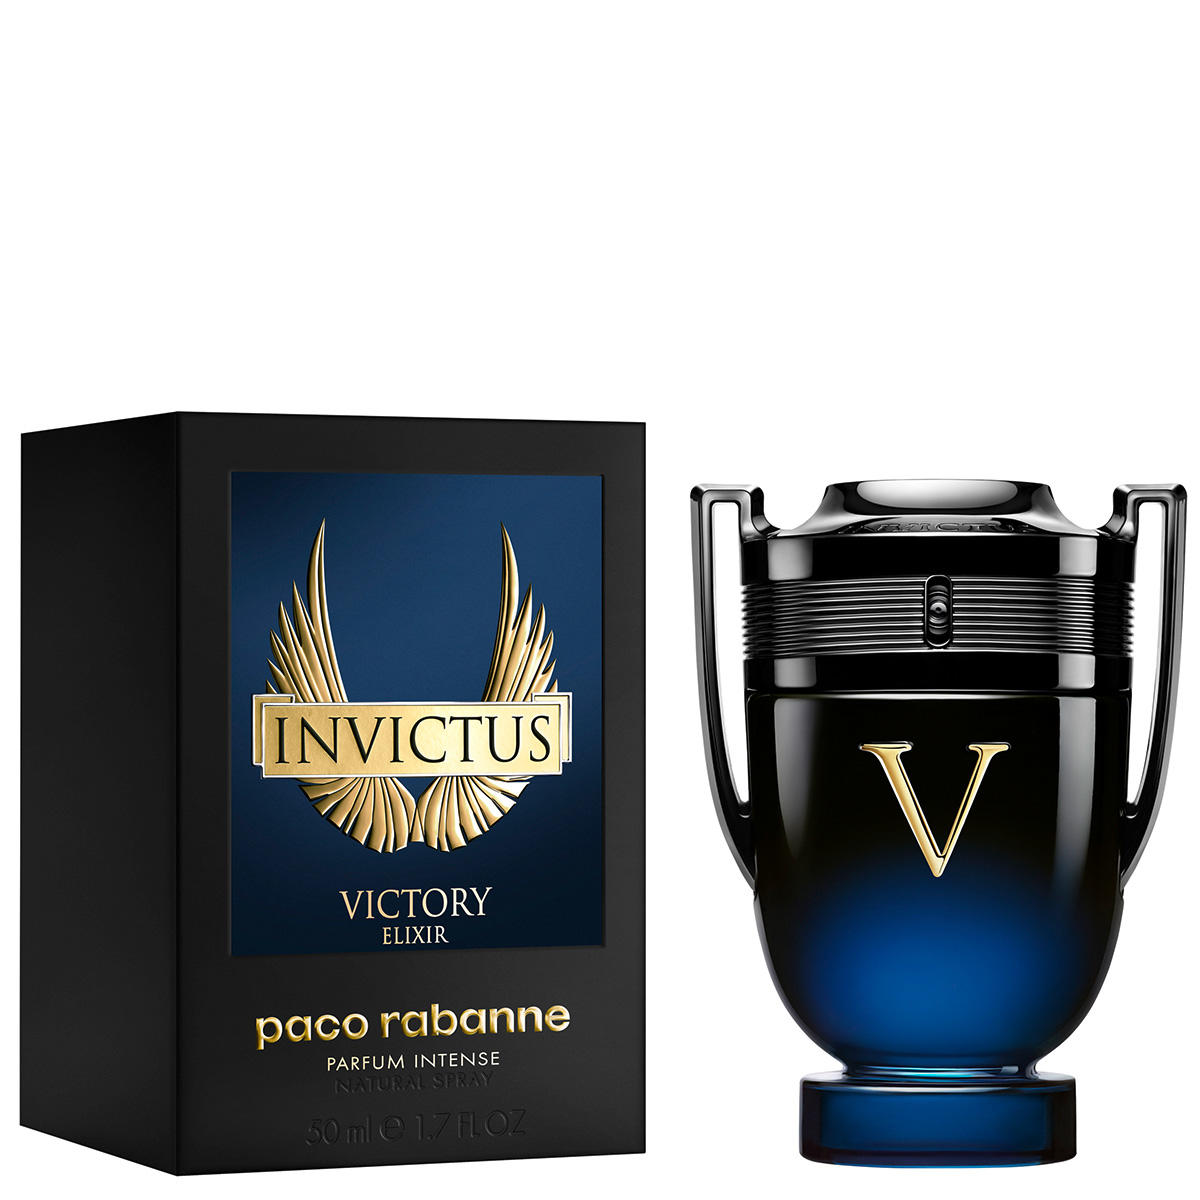 rabanne Invictus Victory Elixir Parfum Intense 200 ml - 2